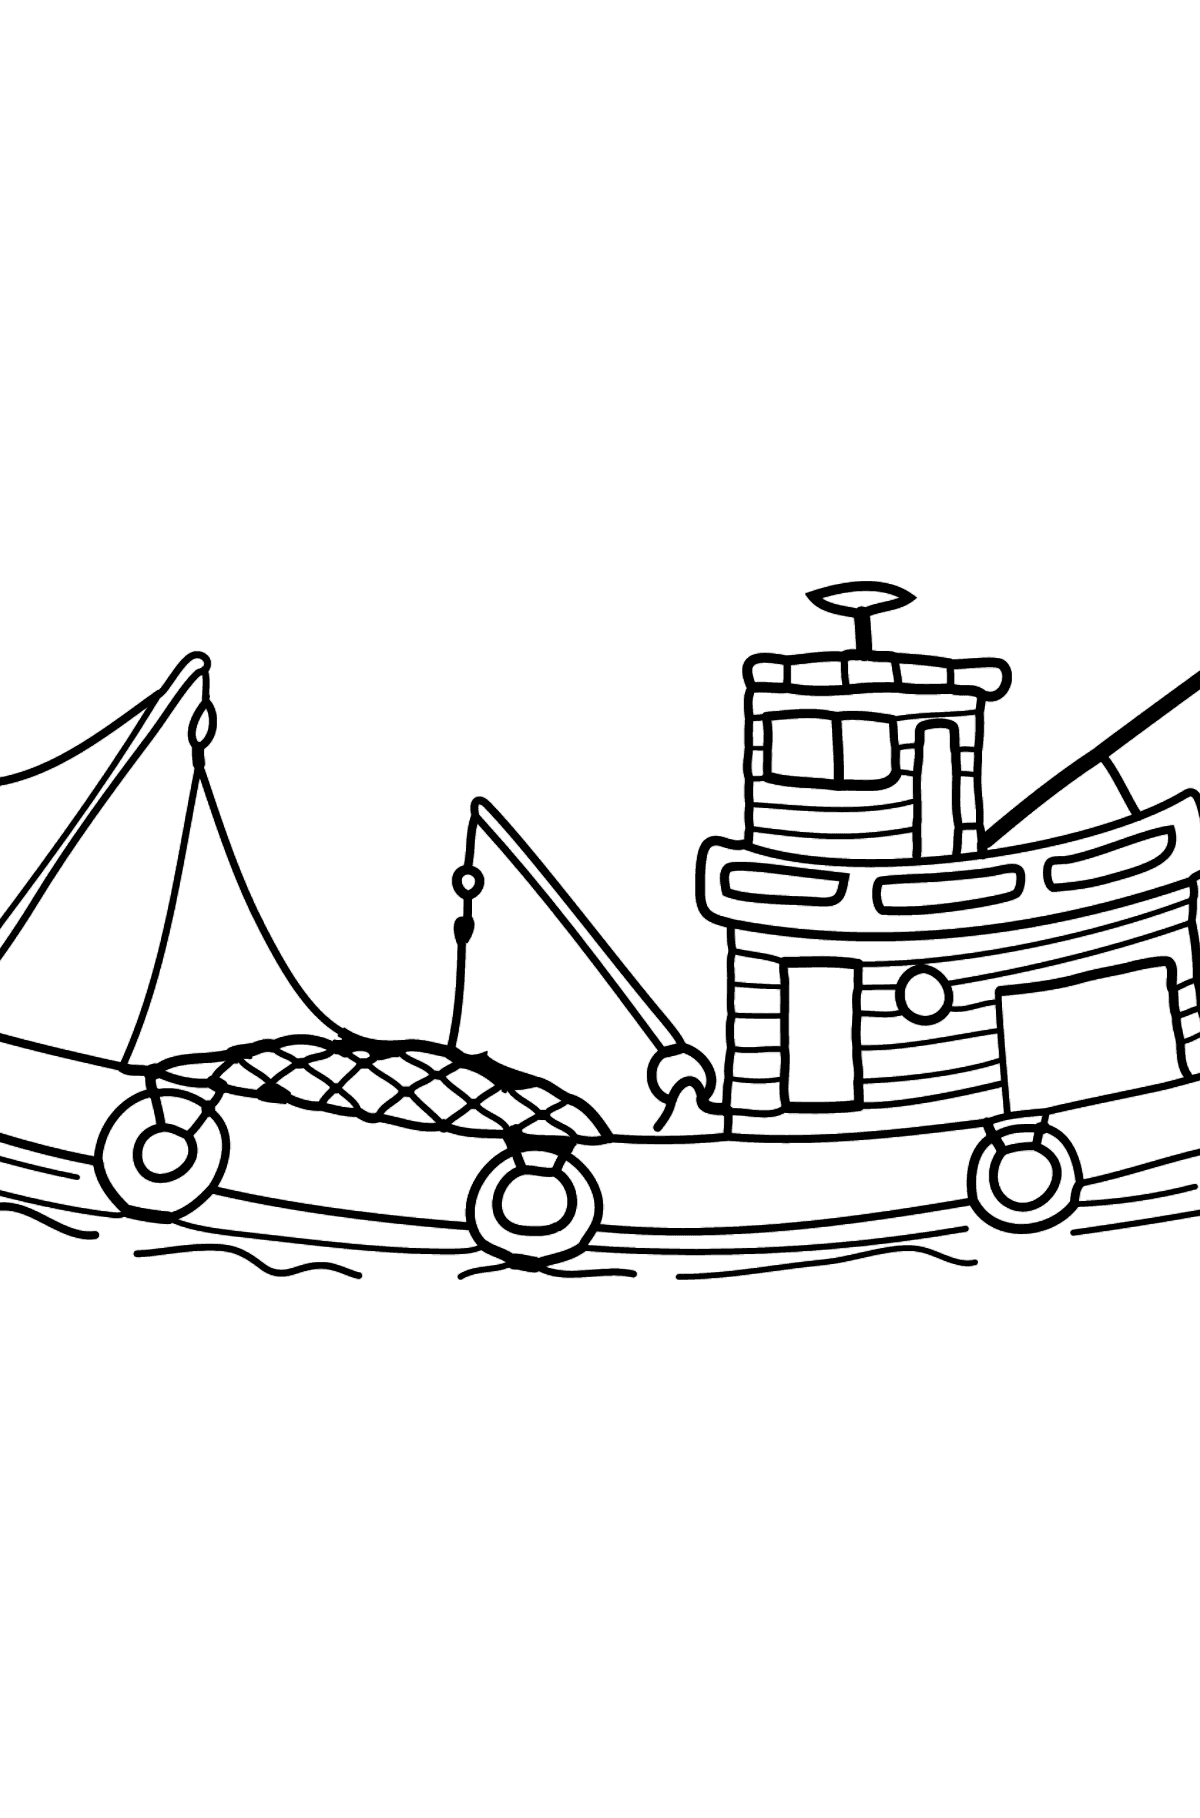 Раскраска рыбацкая лодка - Картинки для Детей